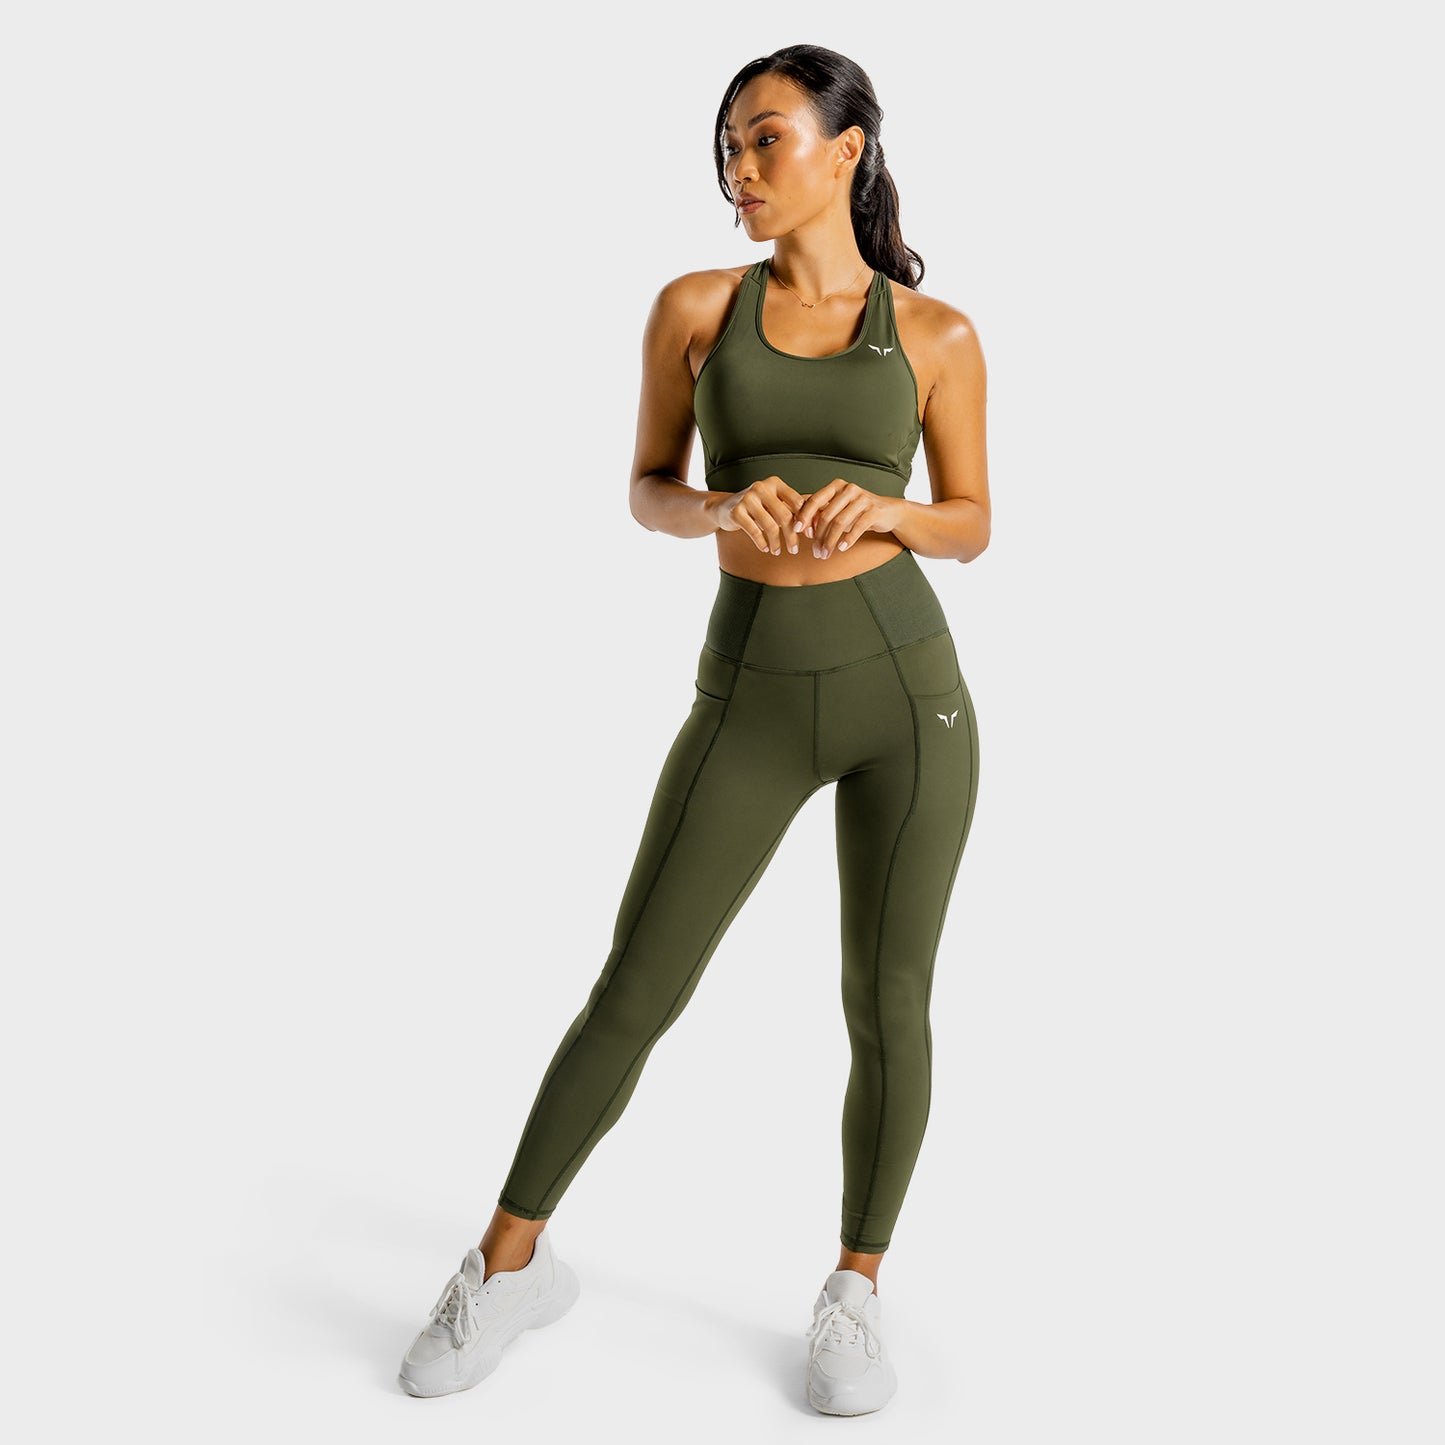 squatwolf-gym-leggings-for-women-core-leggings-78-khaki-workout-clothes